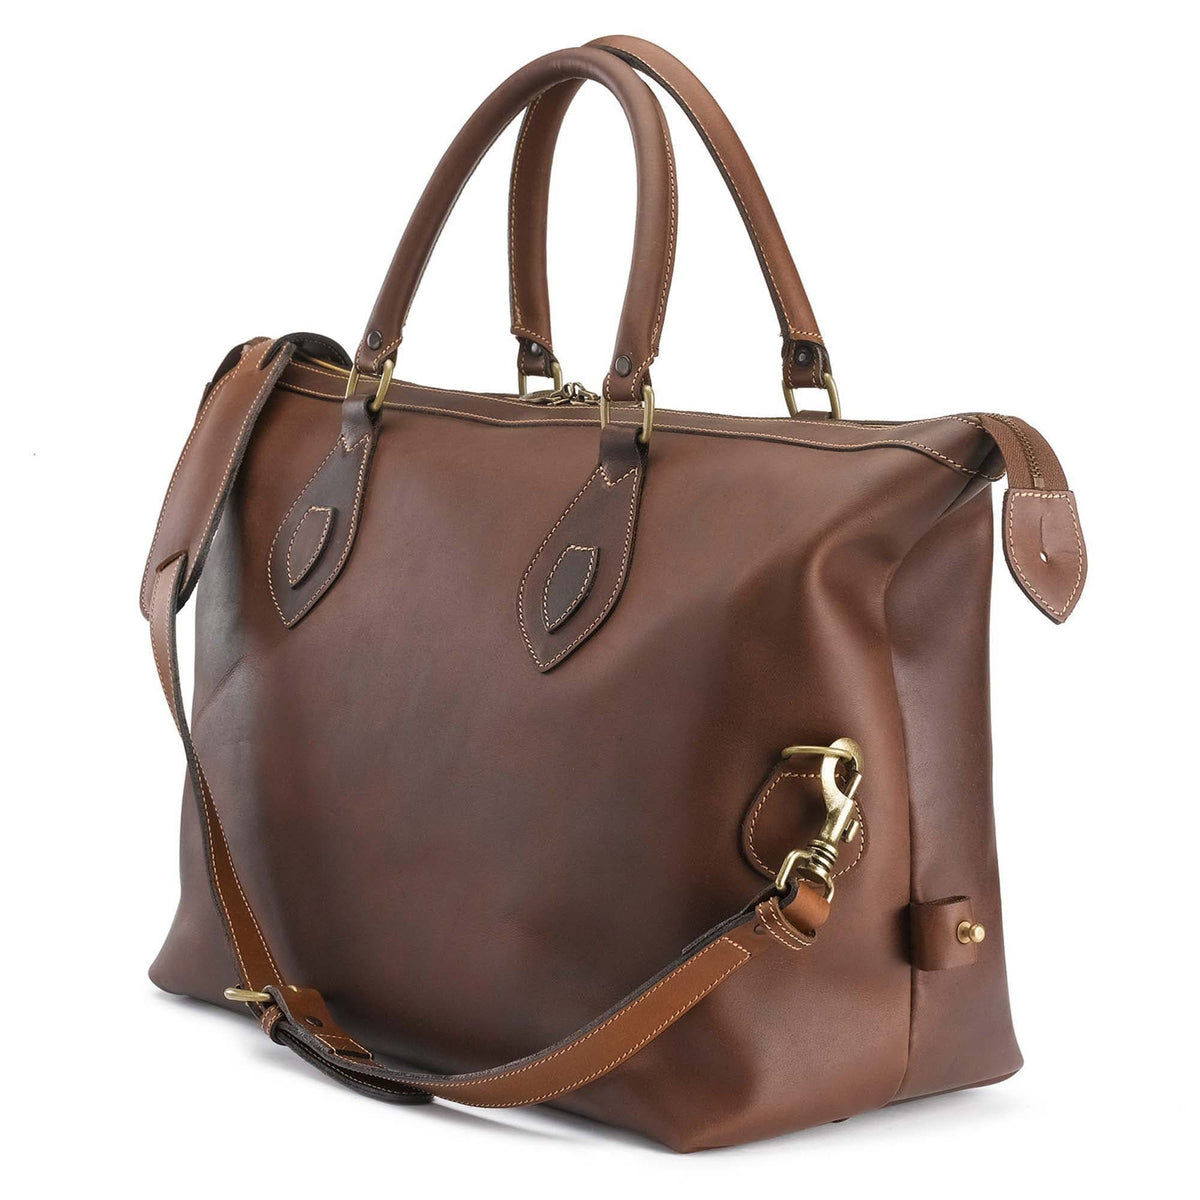 Tusting Travel Medium Explorer Leather Tote Bag